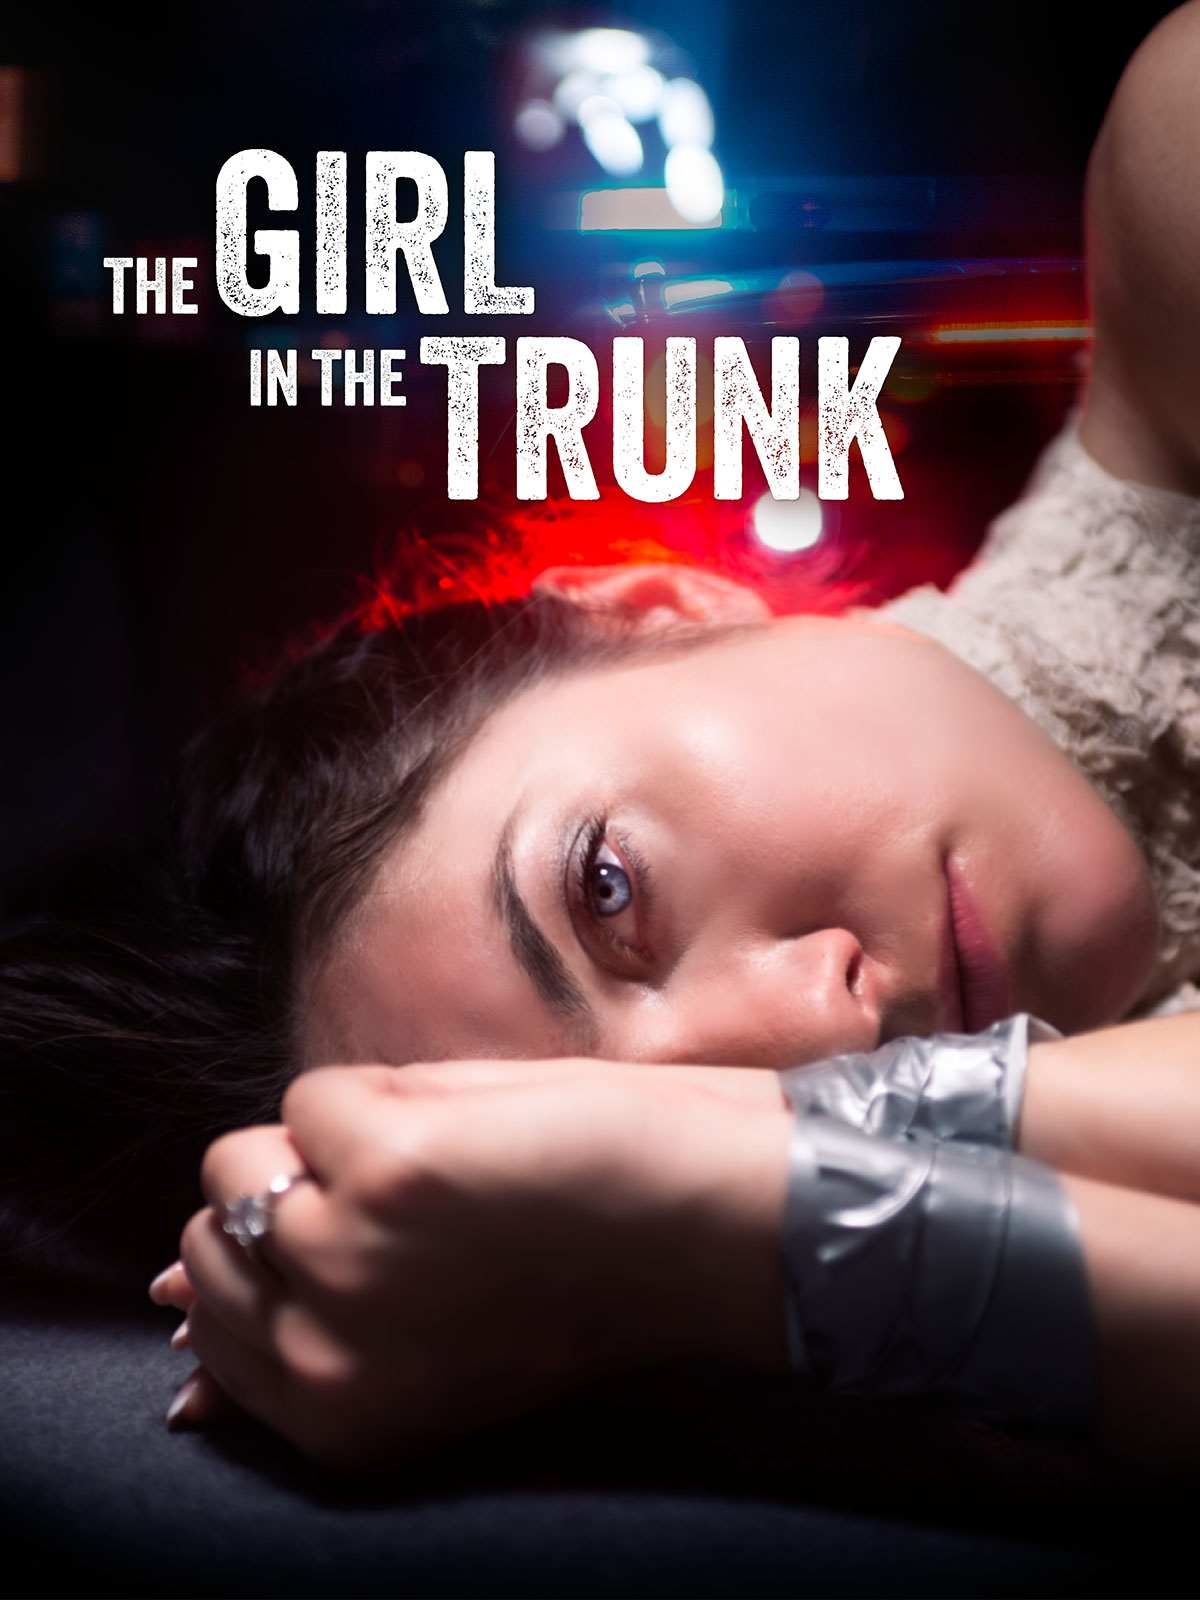 The Girl In The Trunk - Press Release Moviehooker